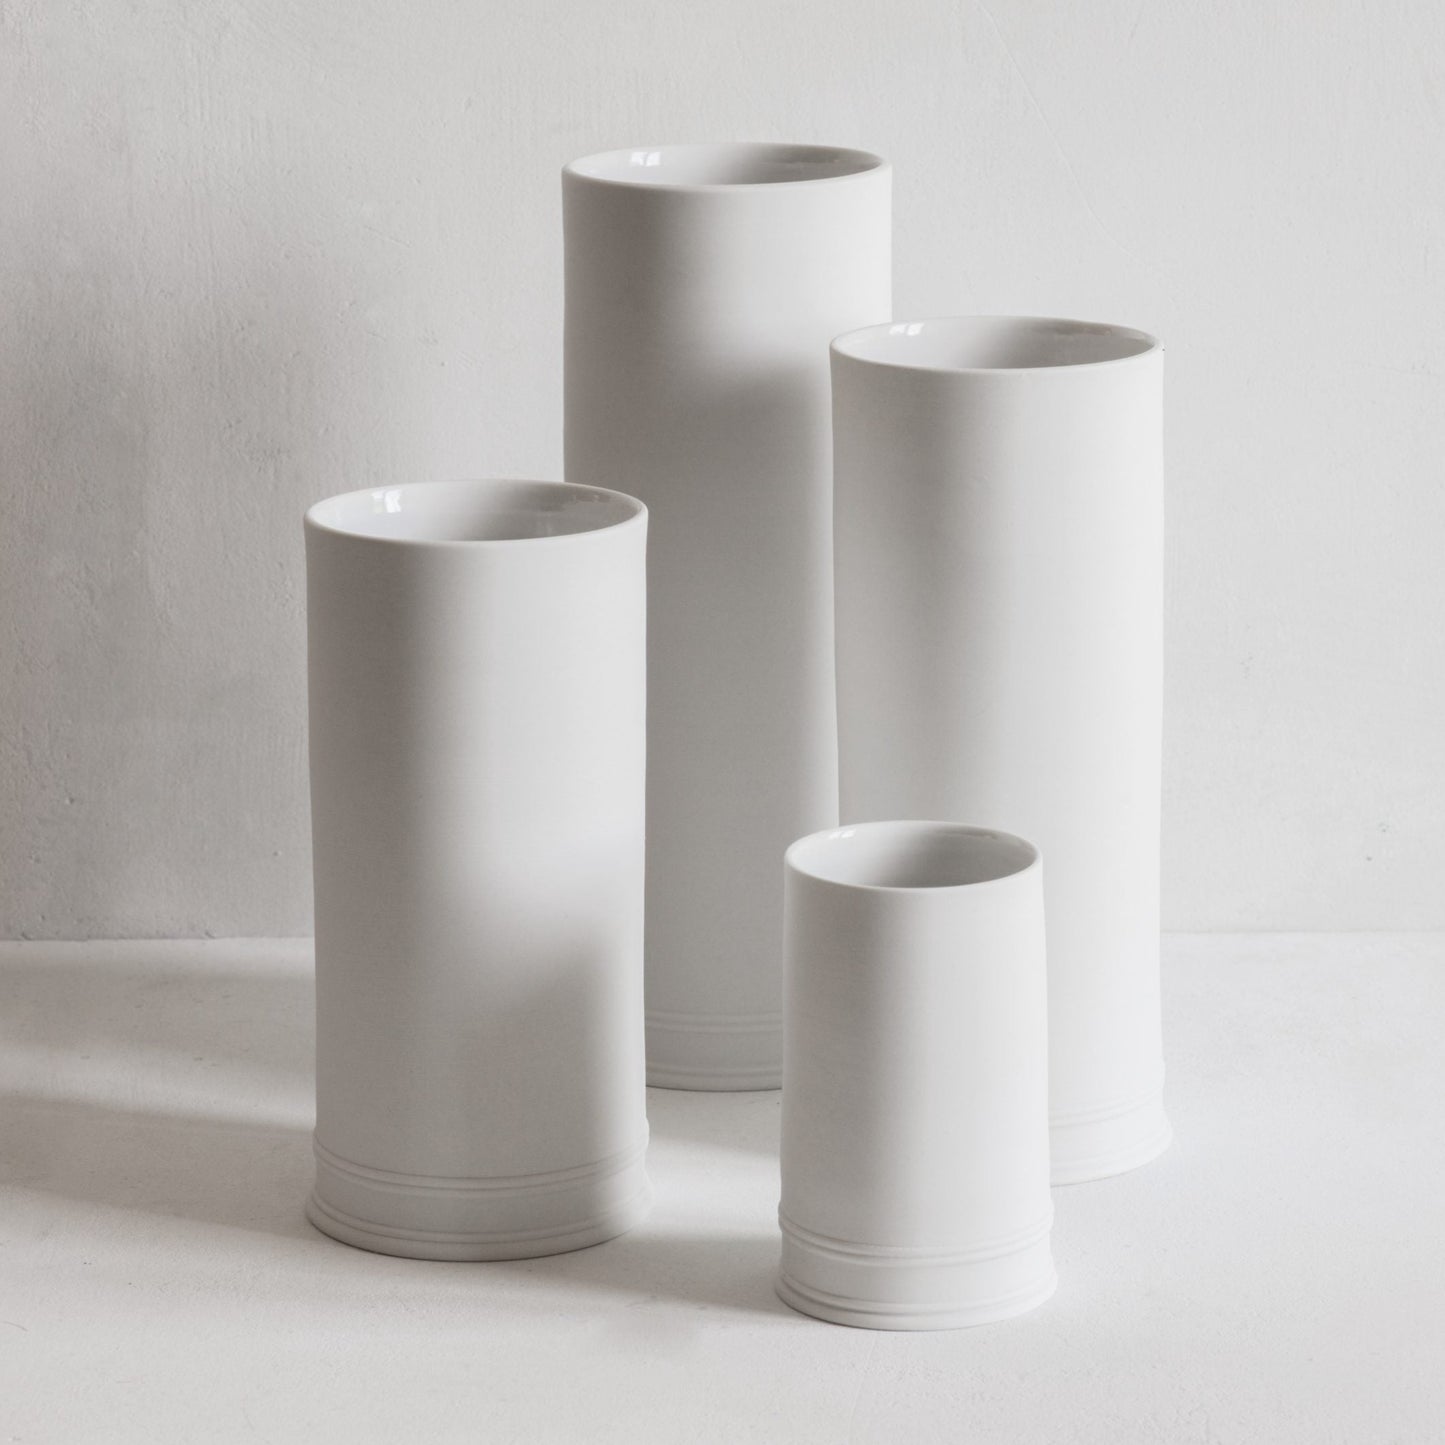 Classical porcelain column vases